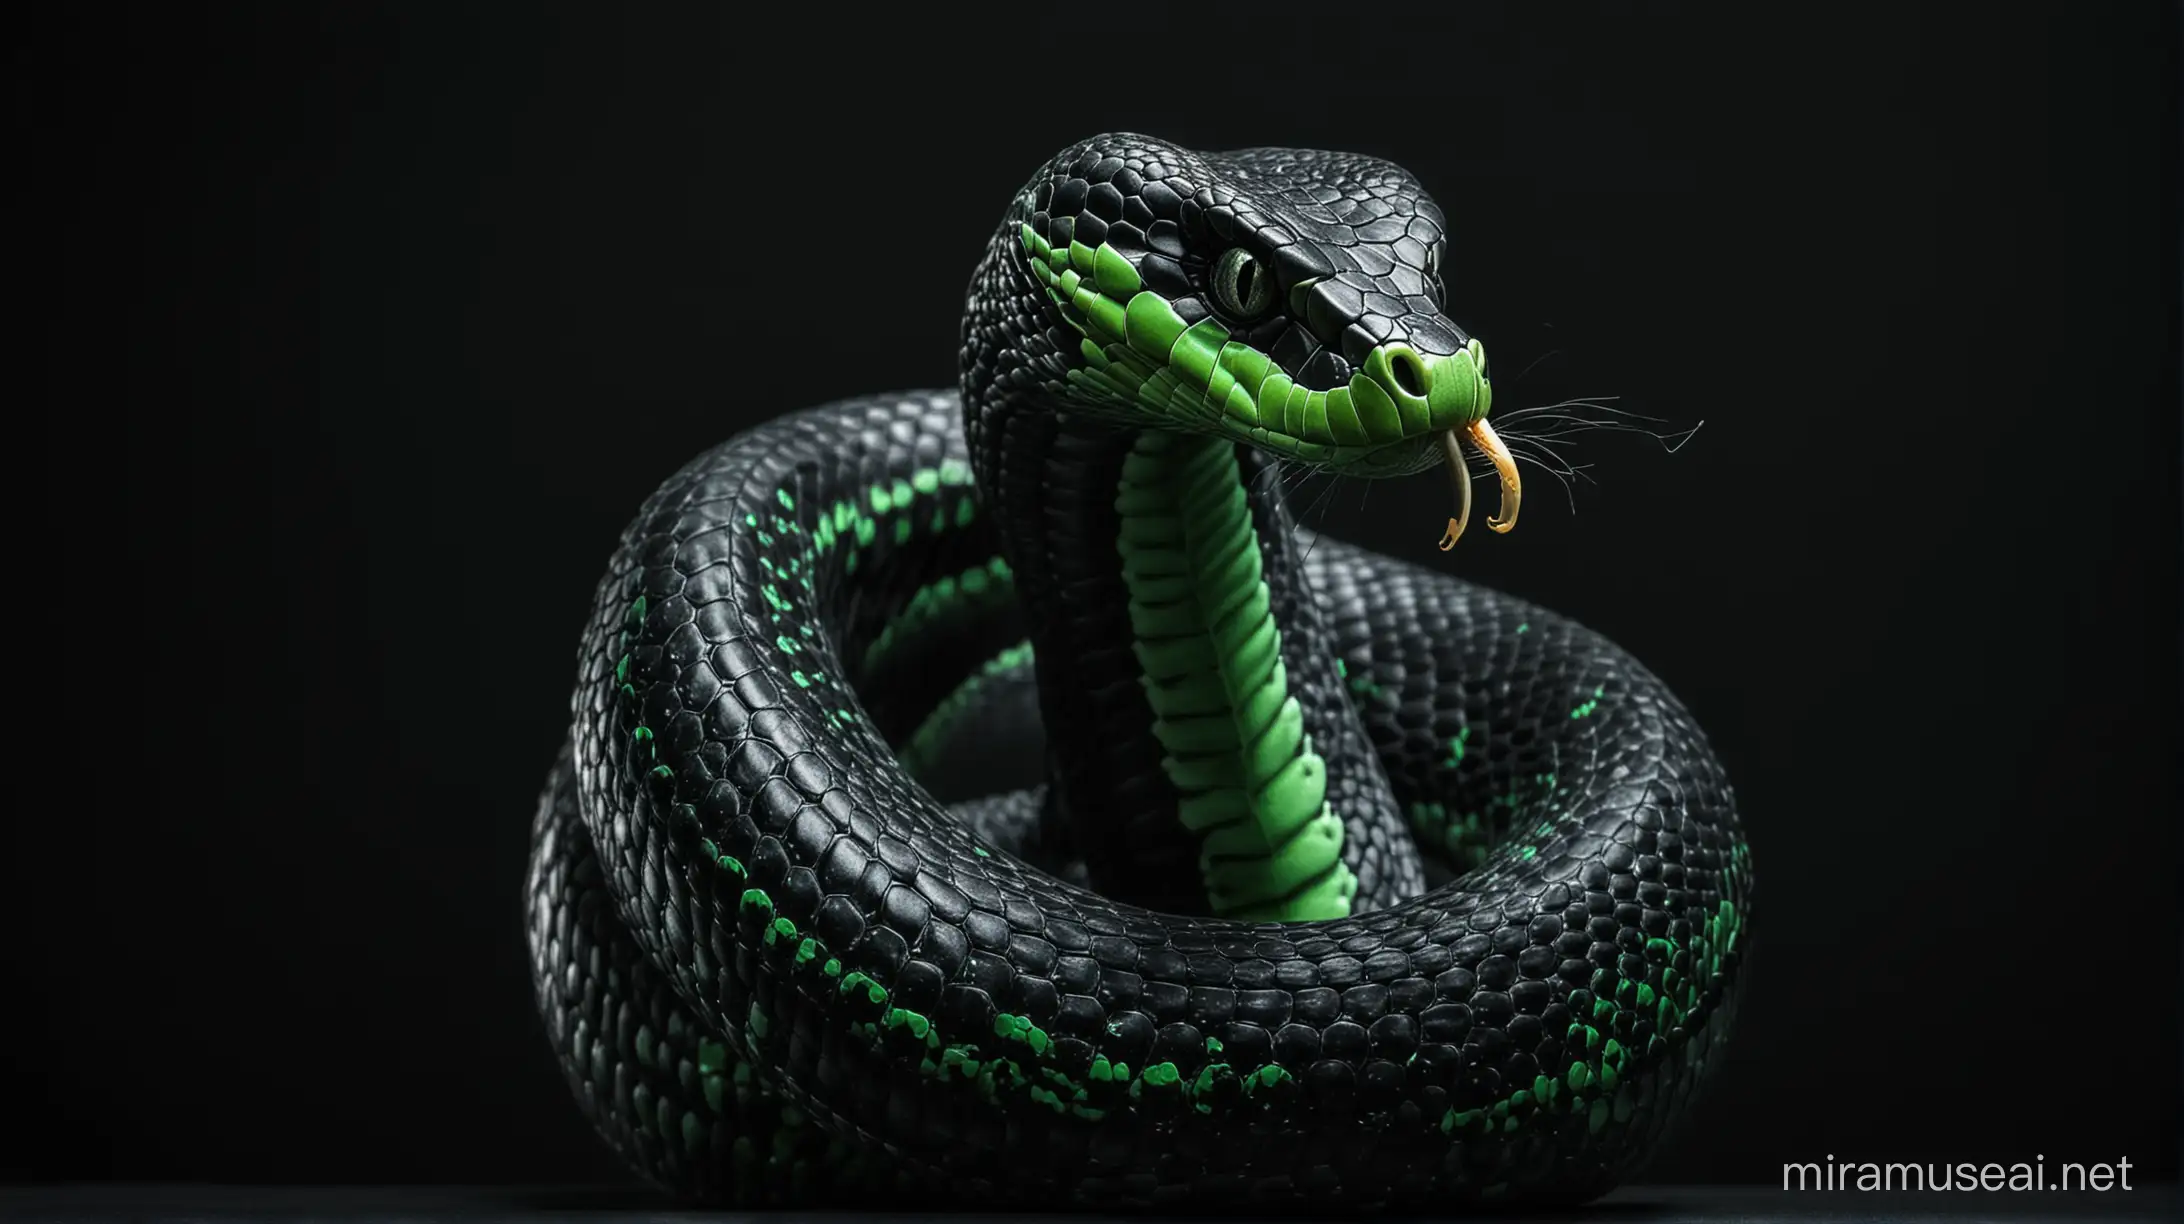  animal cobra black and green theme and black background